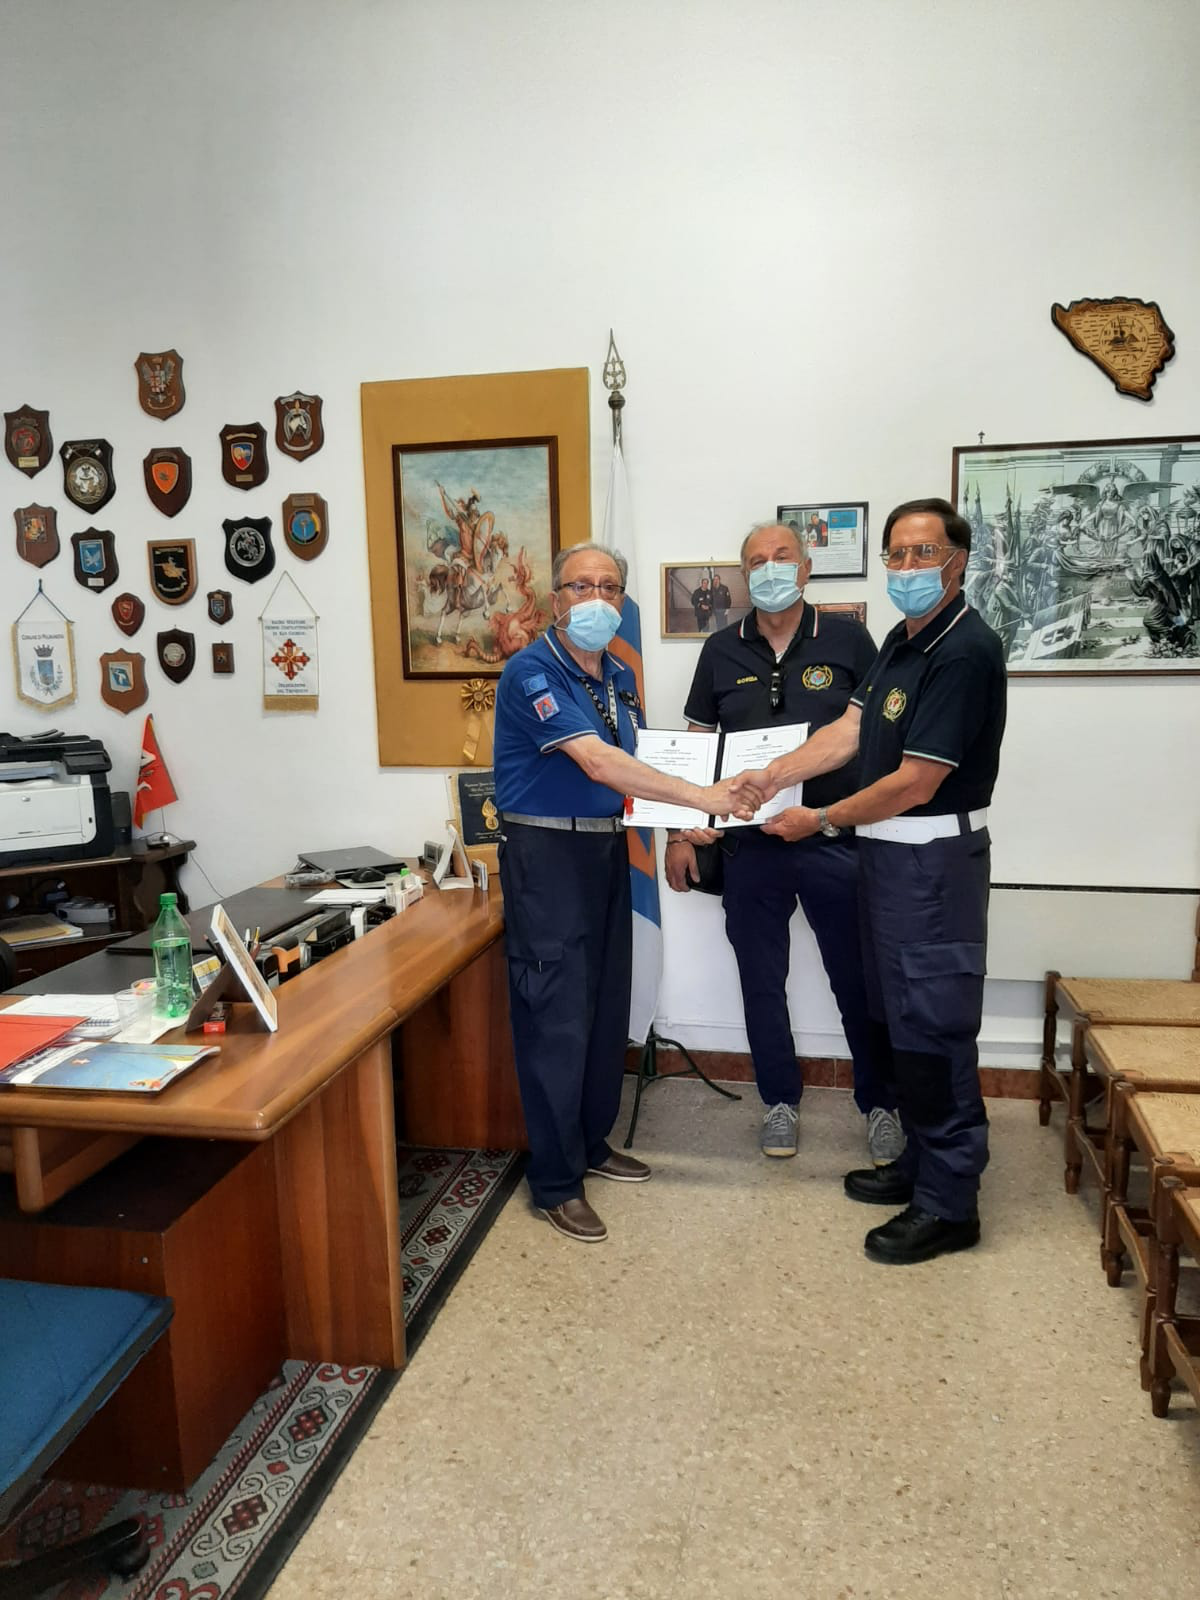 Voontari San Giorgio-Palmanova- visita del presidente dell’I.P.A. (International police association) di gorizia sabato - 26 giugno 2021